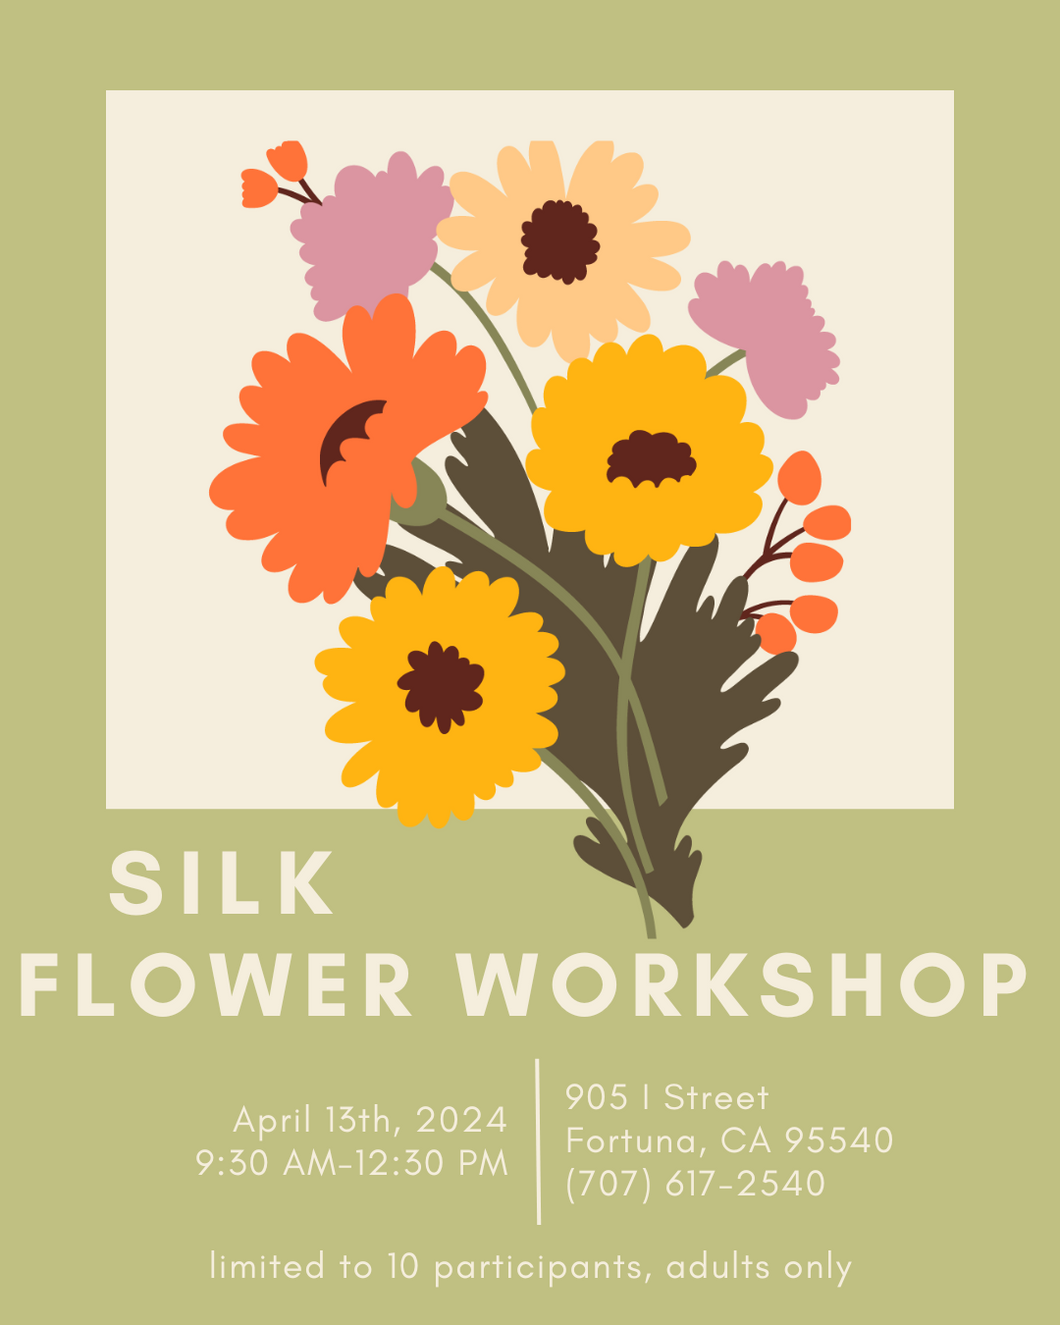 Silk Flower Workshop Registration - May 18th